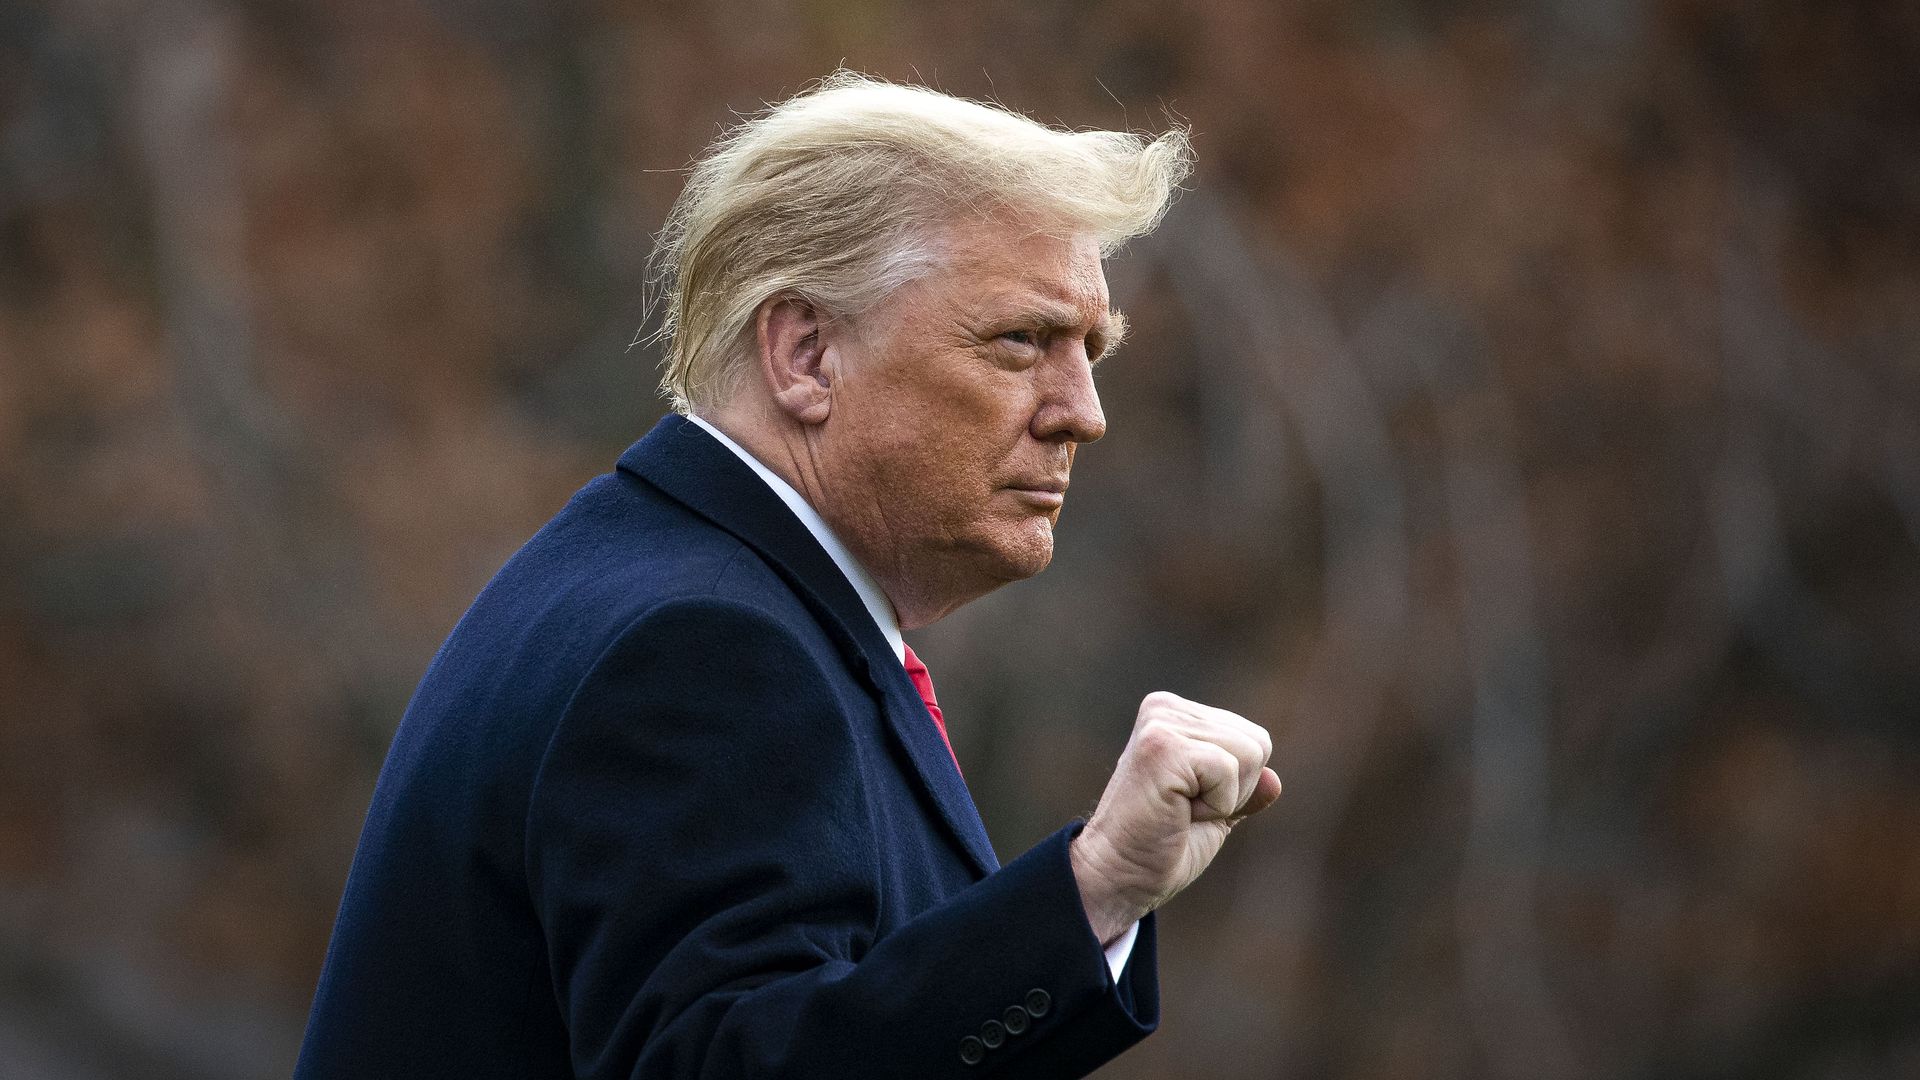 Donald Trump walking outside making a triumphant fist